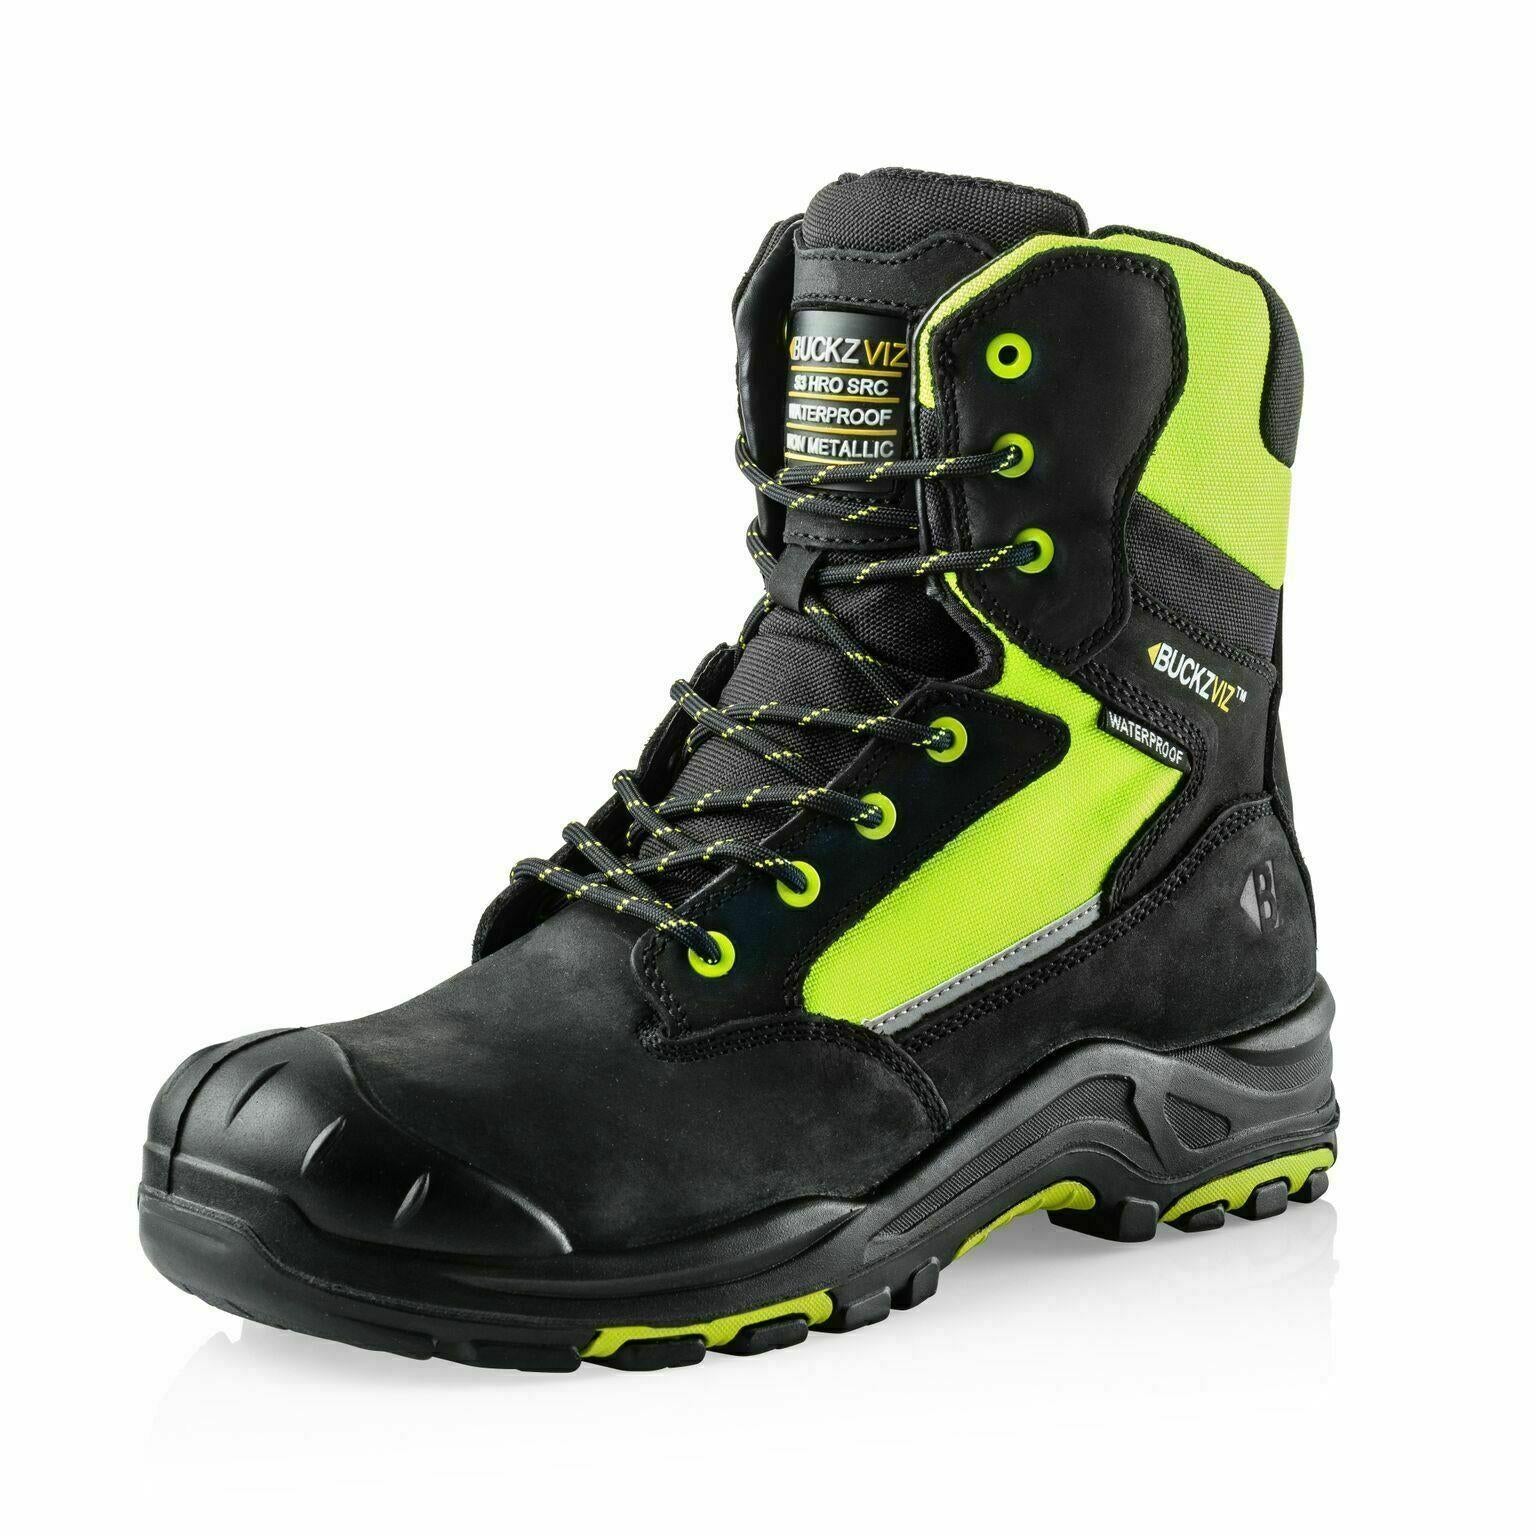 Buckbootz S3 black/yellow side-zip composite toe/midsole safety work boot #BVIZ1